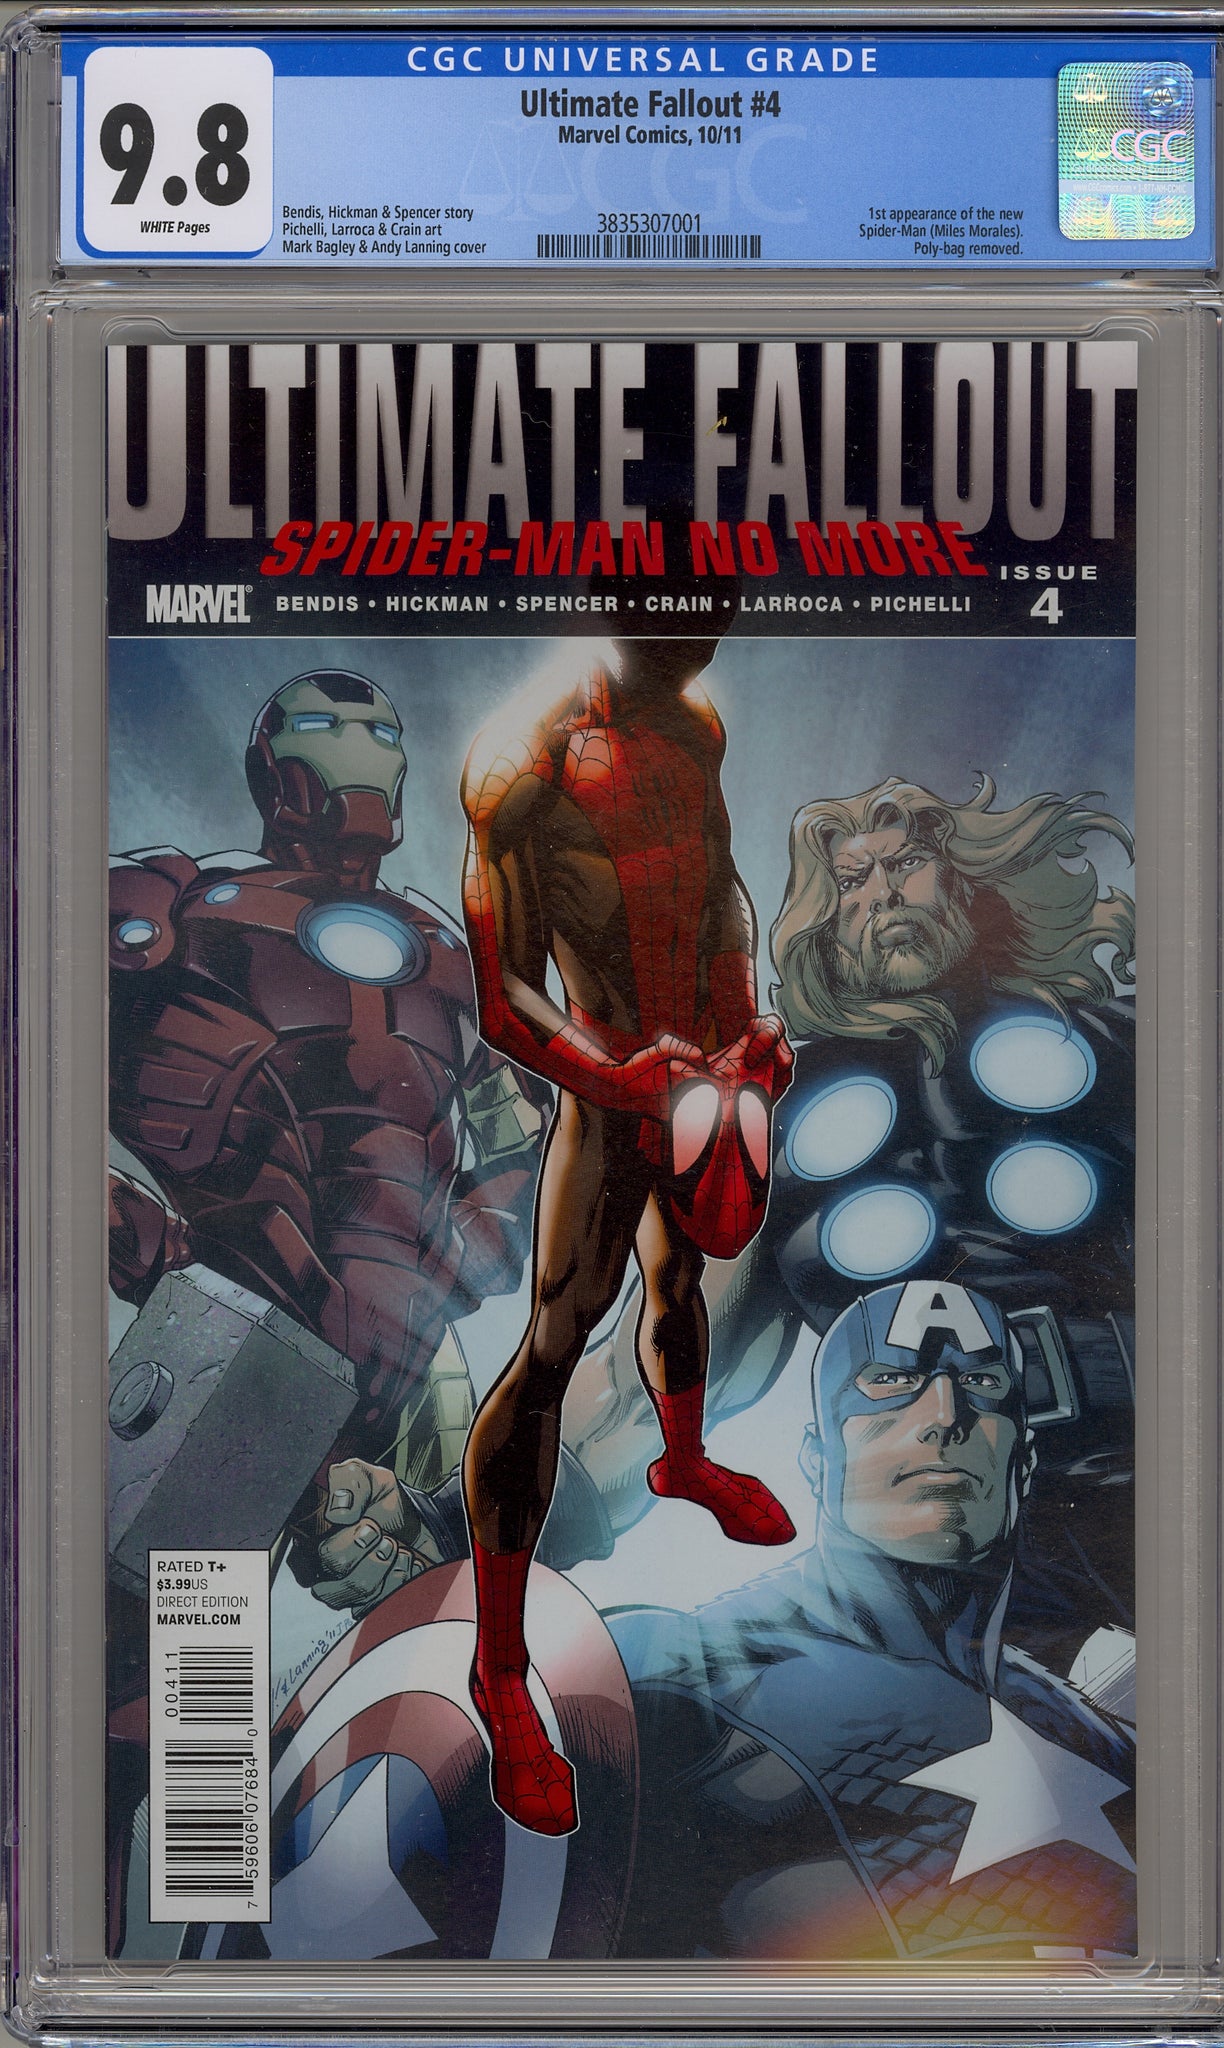 Ultimate Fallout #4 (2011) Spider-Man (Miles Morales) – Jackal